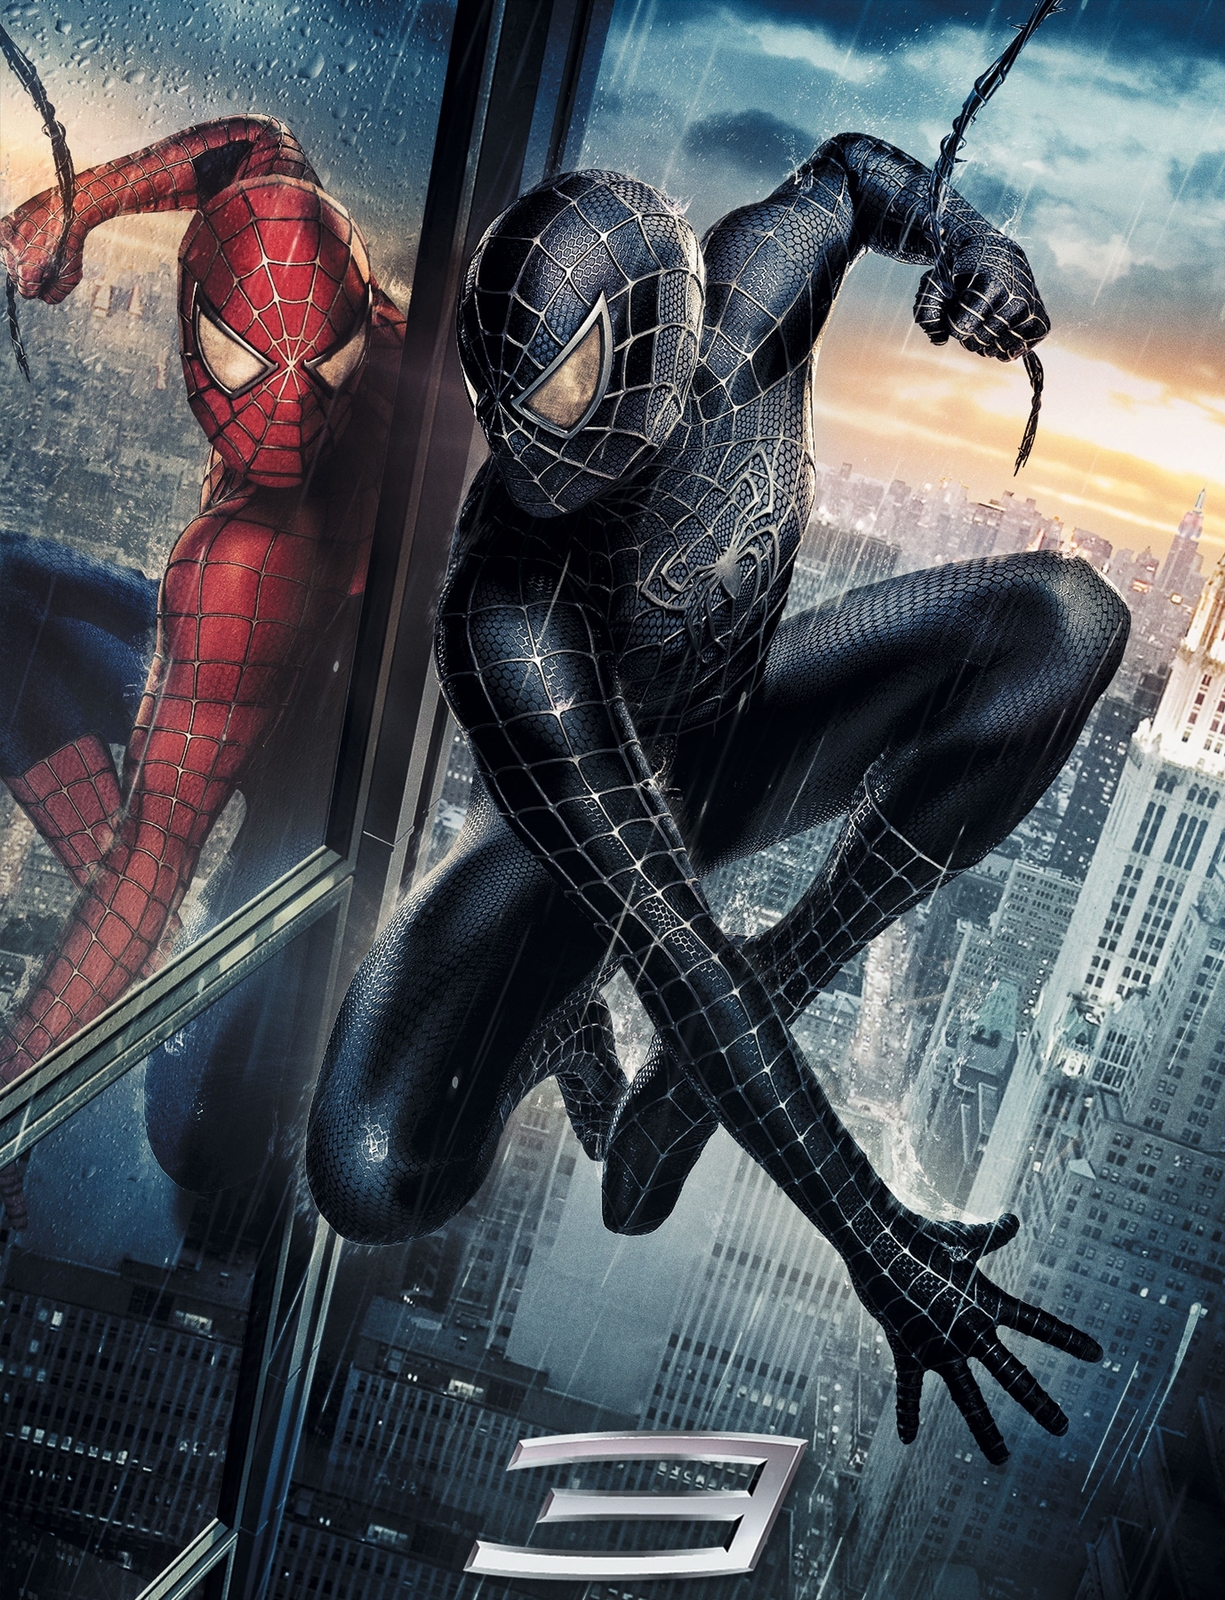 Spider-Man 3 Movie Poster 2007 Art Film Print Size 11x17 24x36" 27x40" 32x48" #4 - $10.90 - $24.90